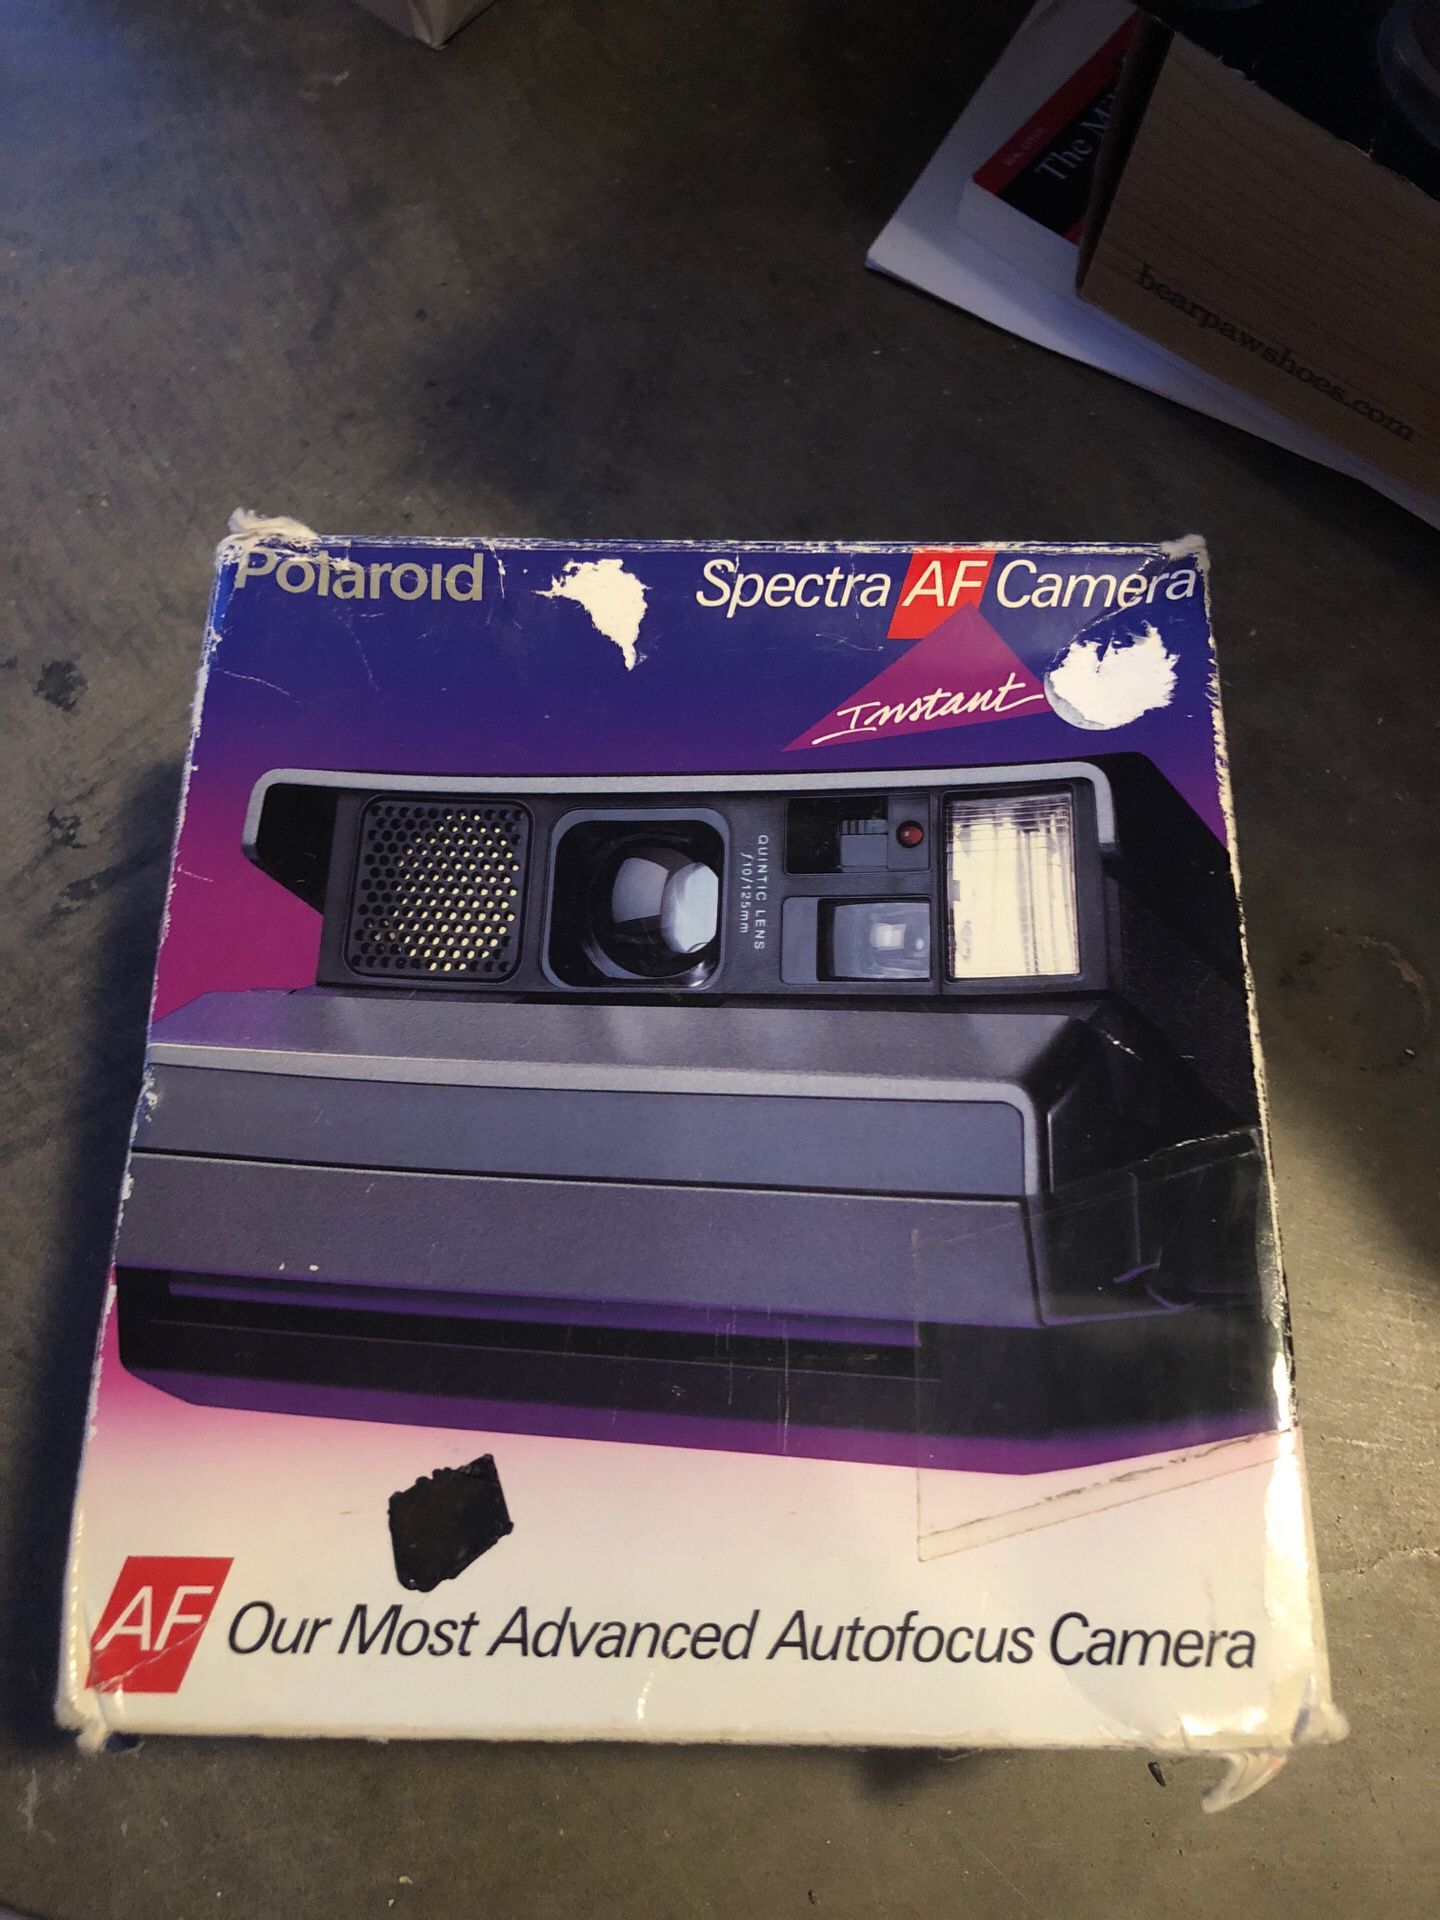 Polaroid spectra AF camera